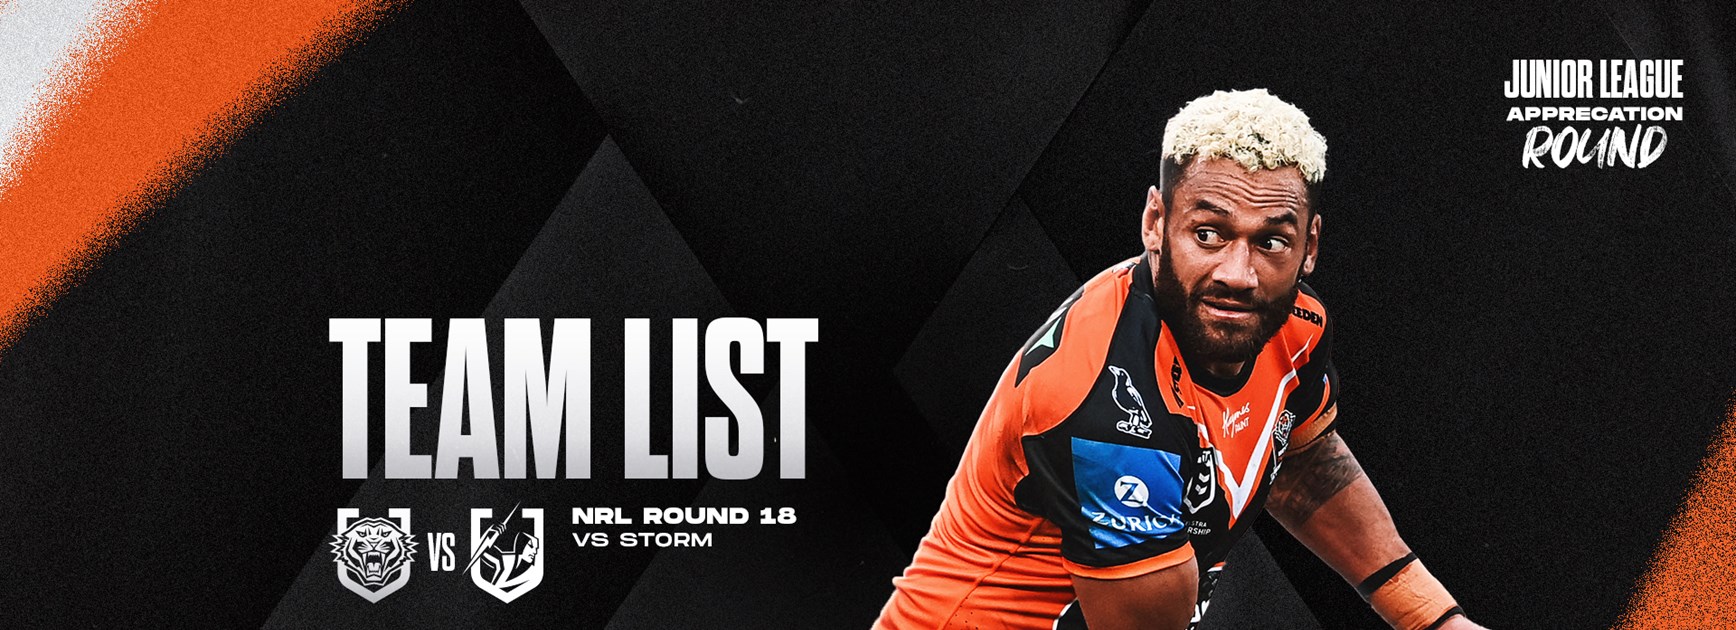 Team List: NRL Round 18 vs Storm